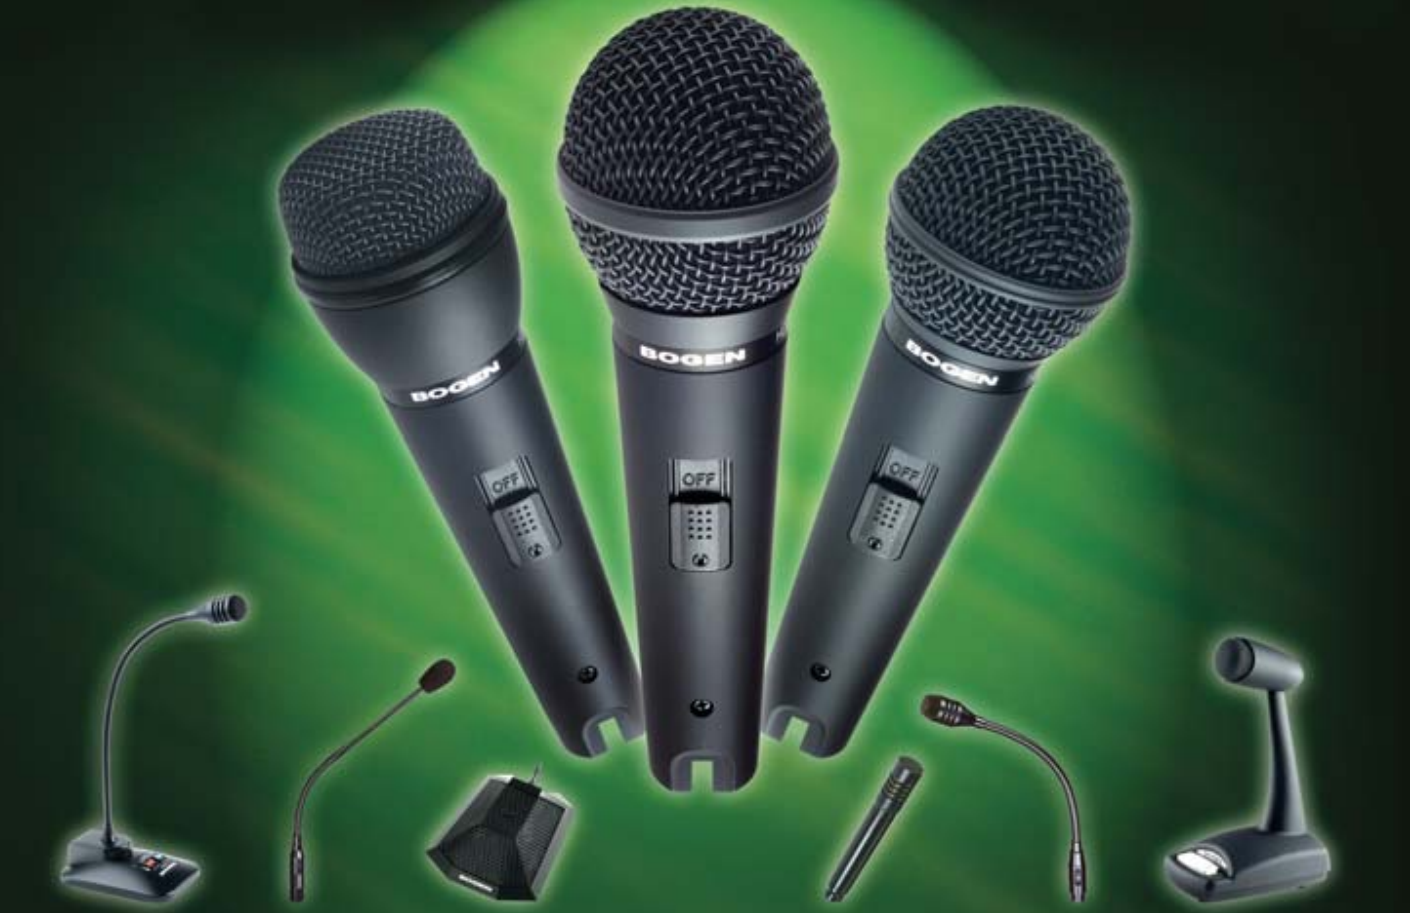 BOGEN Professional Handheld Stage Microphone HDU250 Instruction Manual